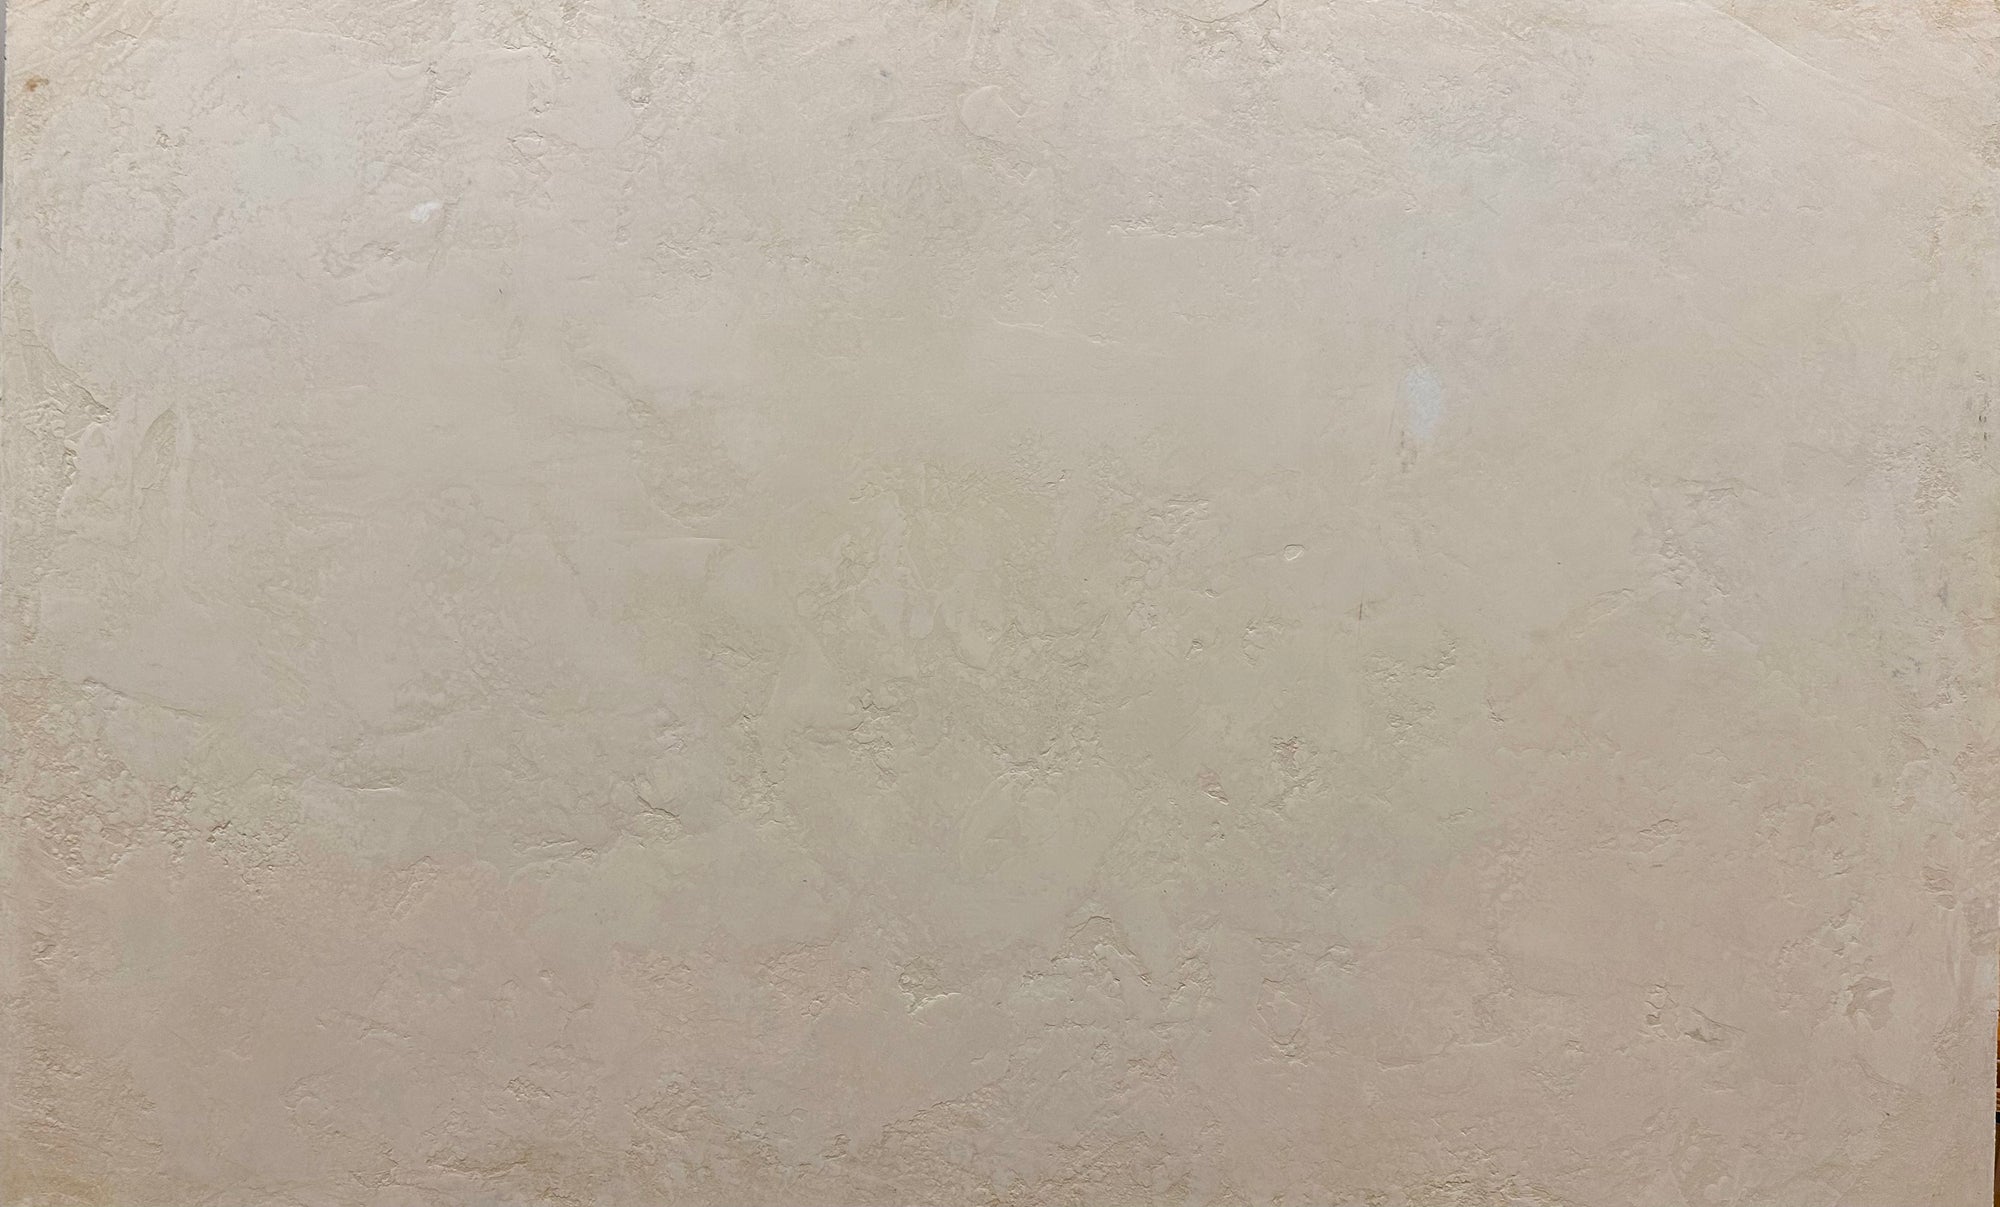 Venetian Plaster Off White Textured Surface